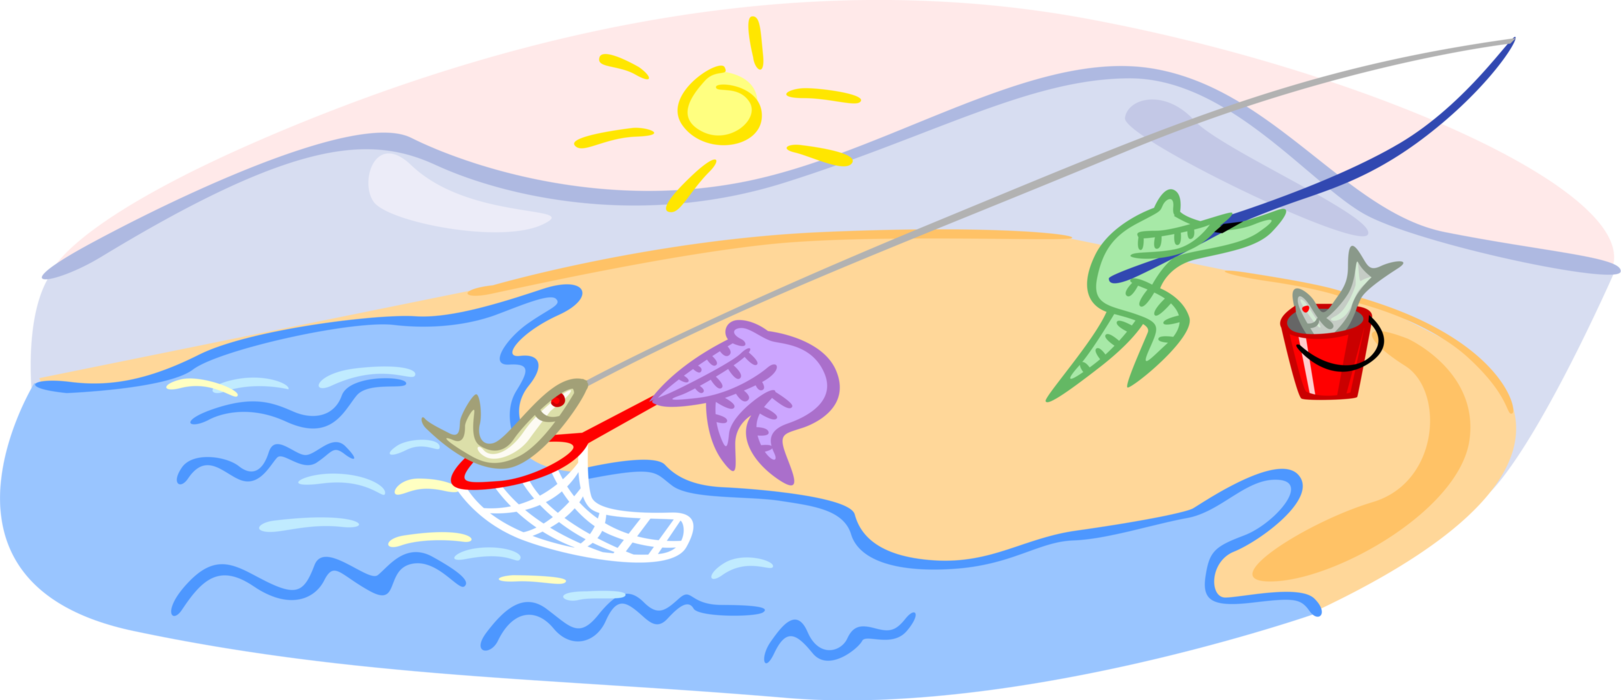 Vector Illustration of Fishermen Use Teamwork While Fishing to Land Fish